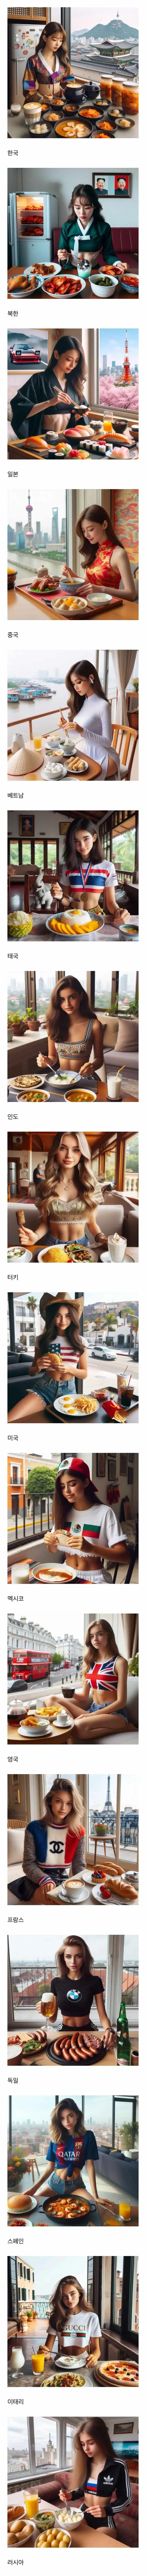 Ai가 그린 아침 식사하는 각국 여성 ㄷㄷㄷ.jpg | mbong.kr 엠봉